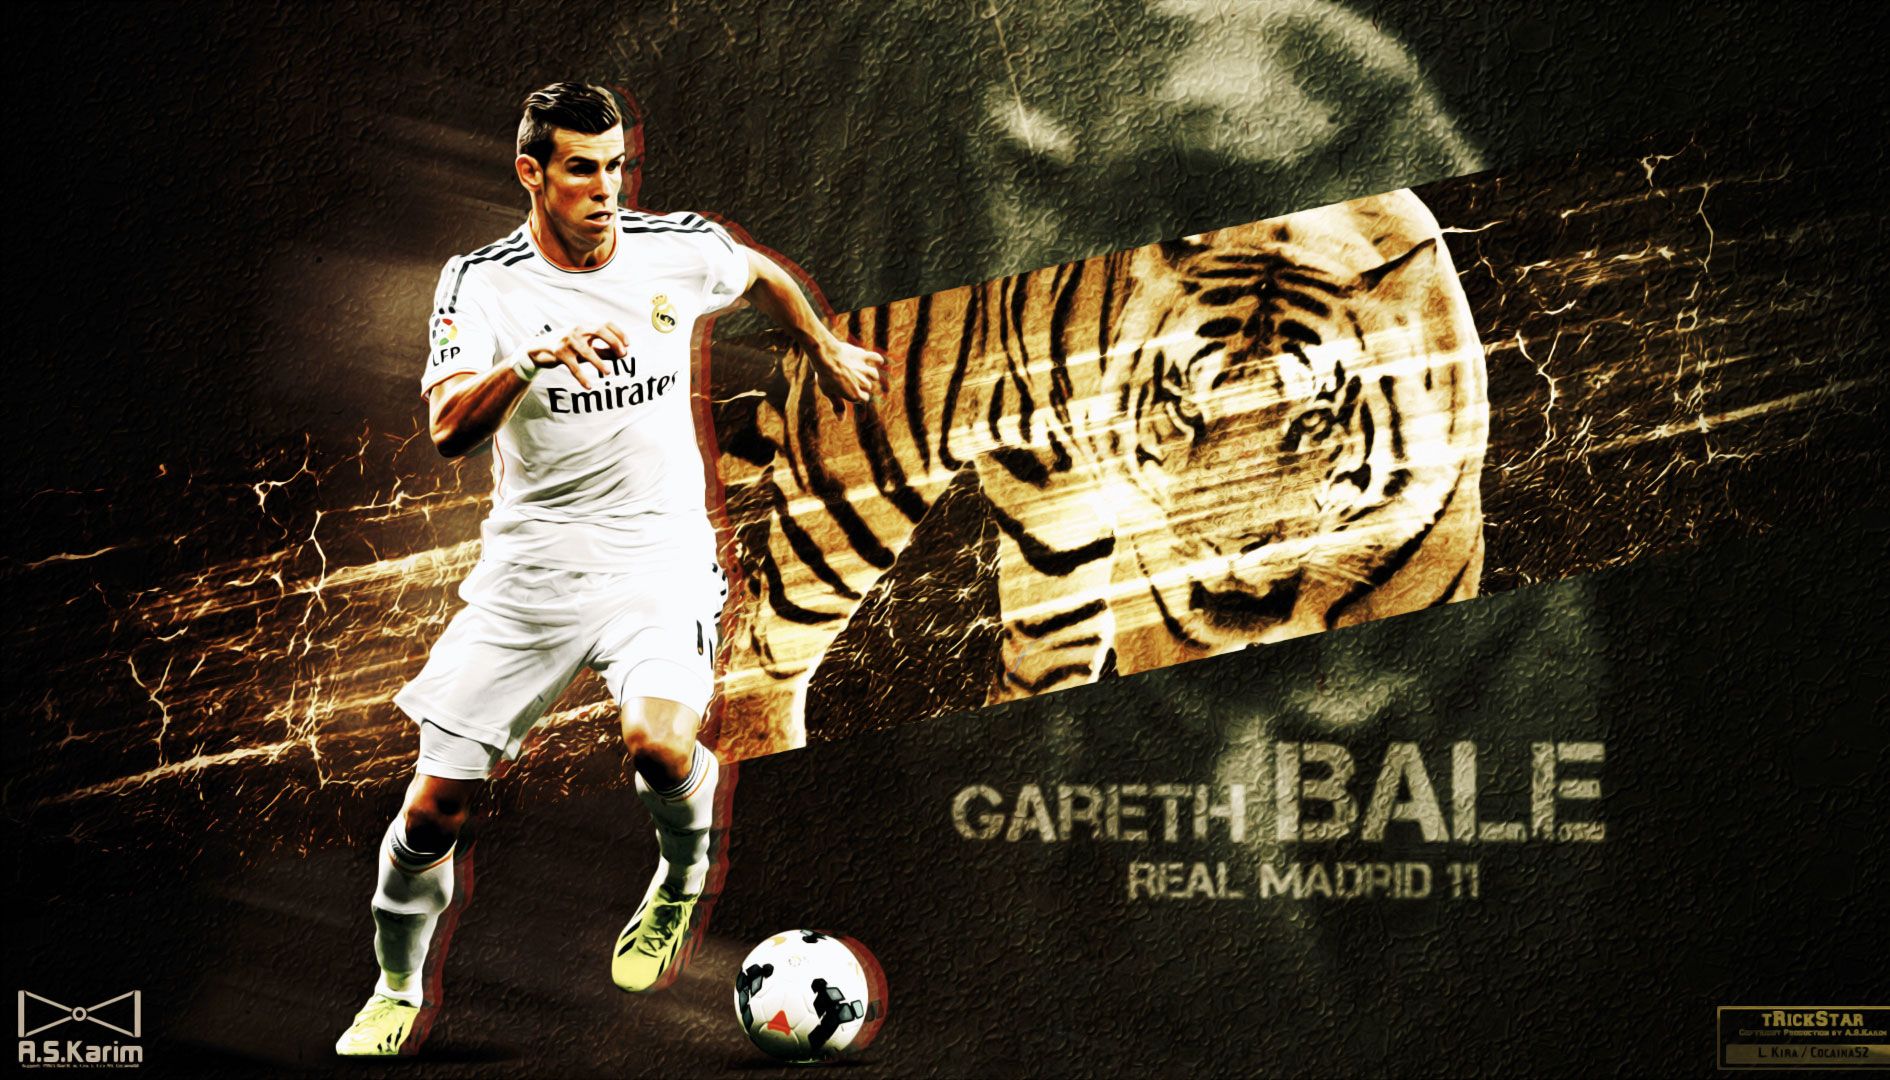 Gareth Bale HD Wallpaper Image Photos